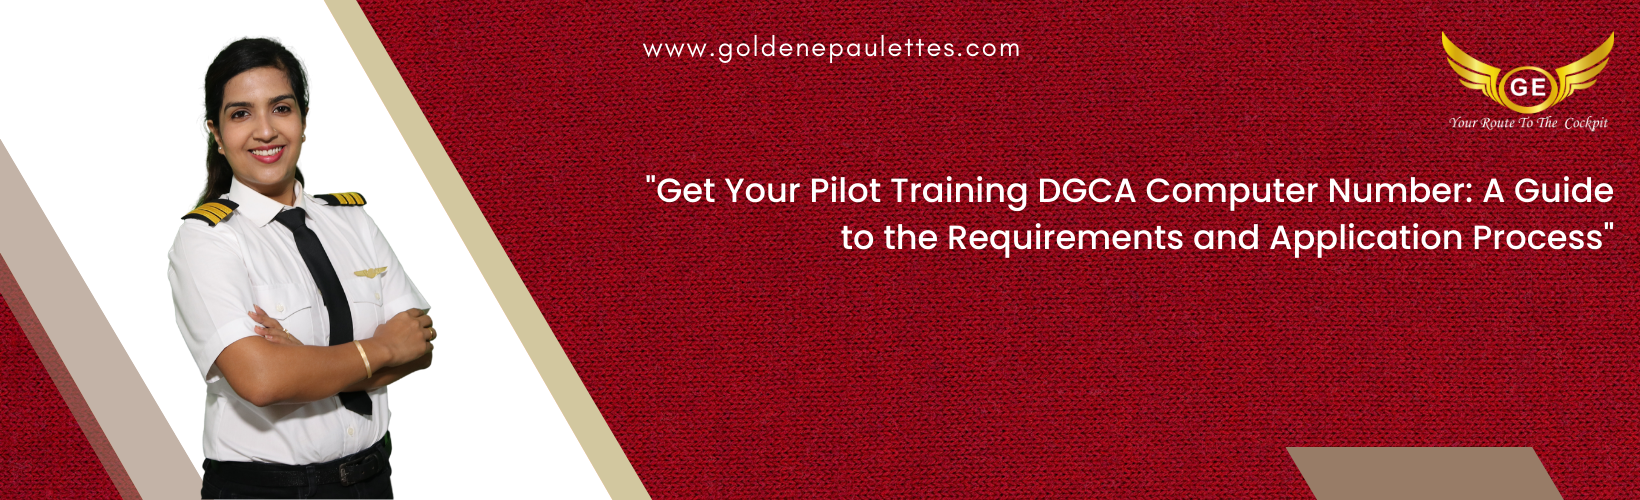 A Guide to Obtaining a Pilot Training DGCA Computer Number